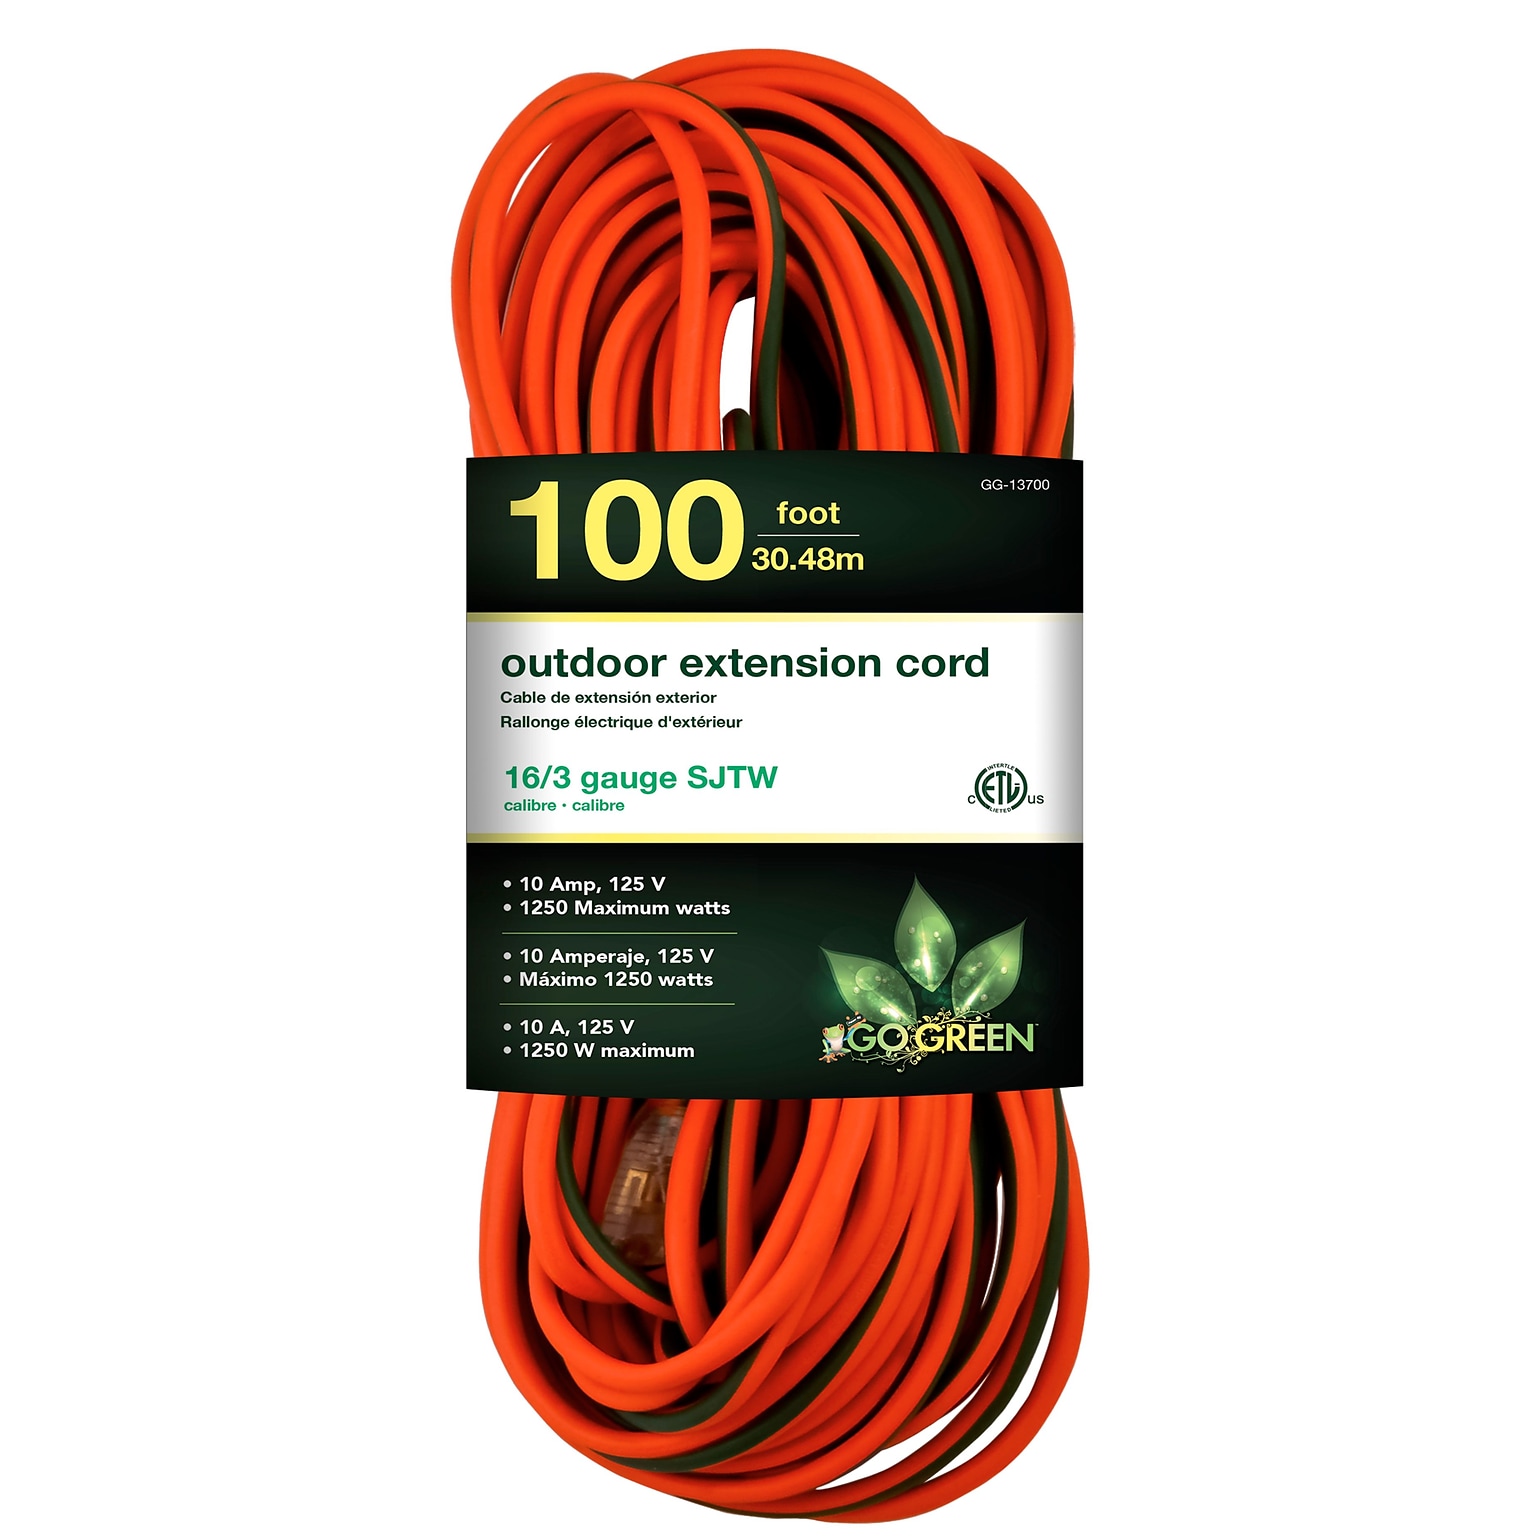 GoGreen Power 100 Indoor/Outdoor Extension Cord, 16 AWG, Orange (GG-13700)